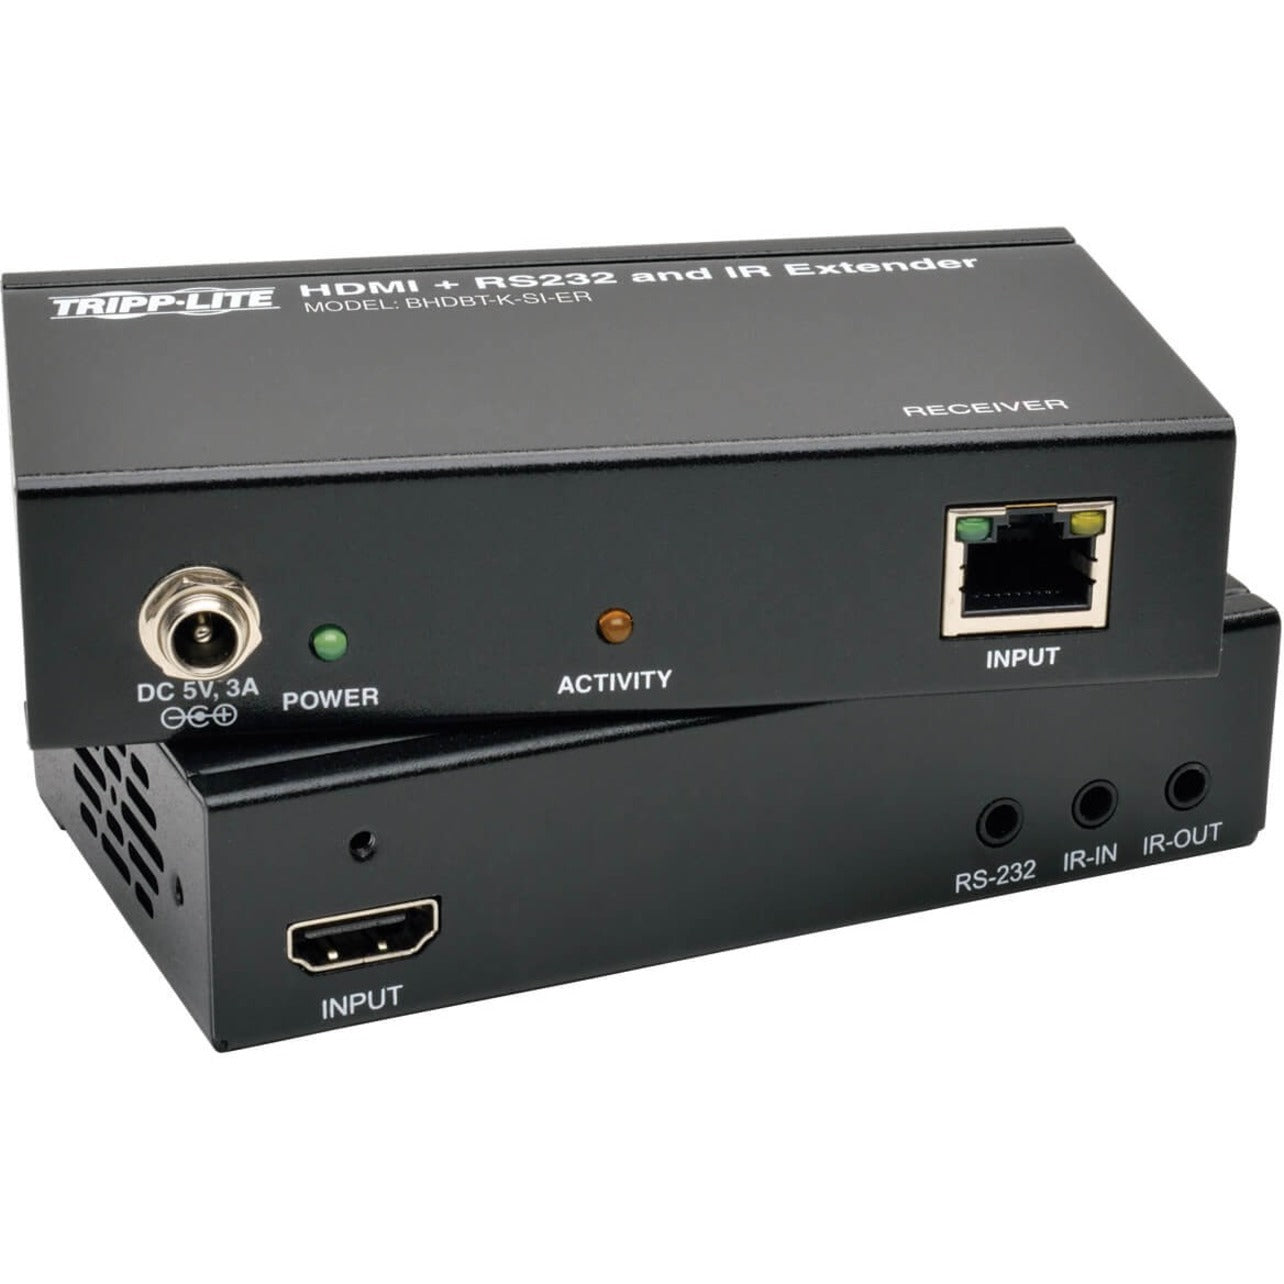 Tripp Lite BHDBT-K-SI-ER Video Console/Extender, Full HD, 1920 x 1080, TAA Compliant, 1 Year Warranty